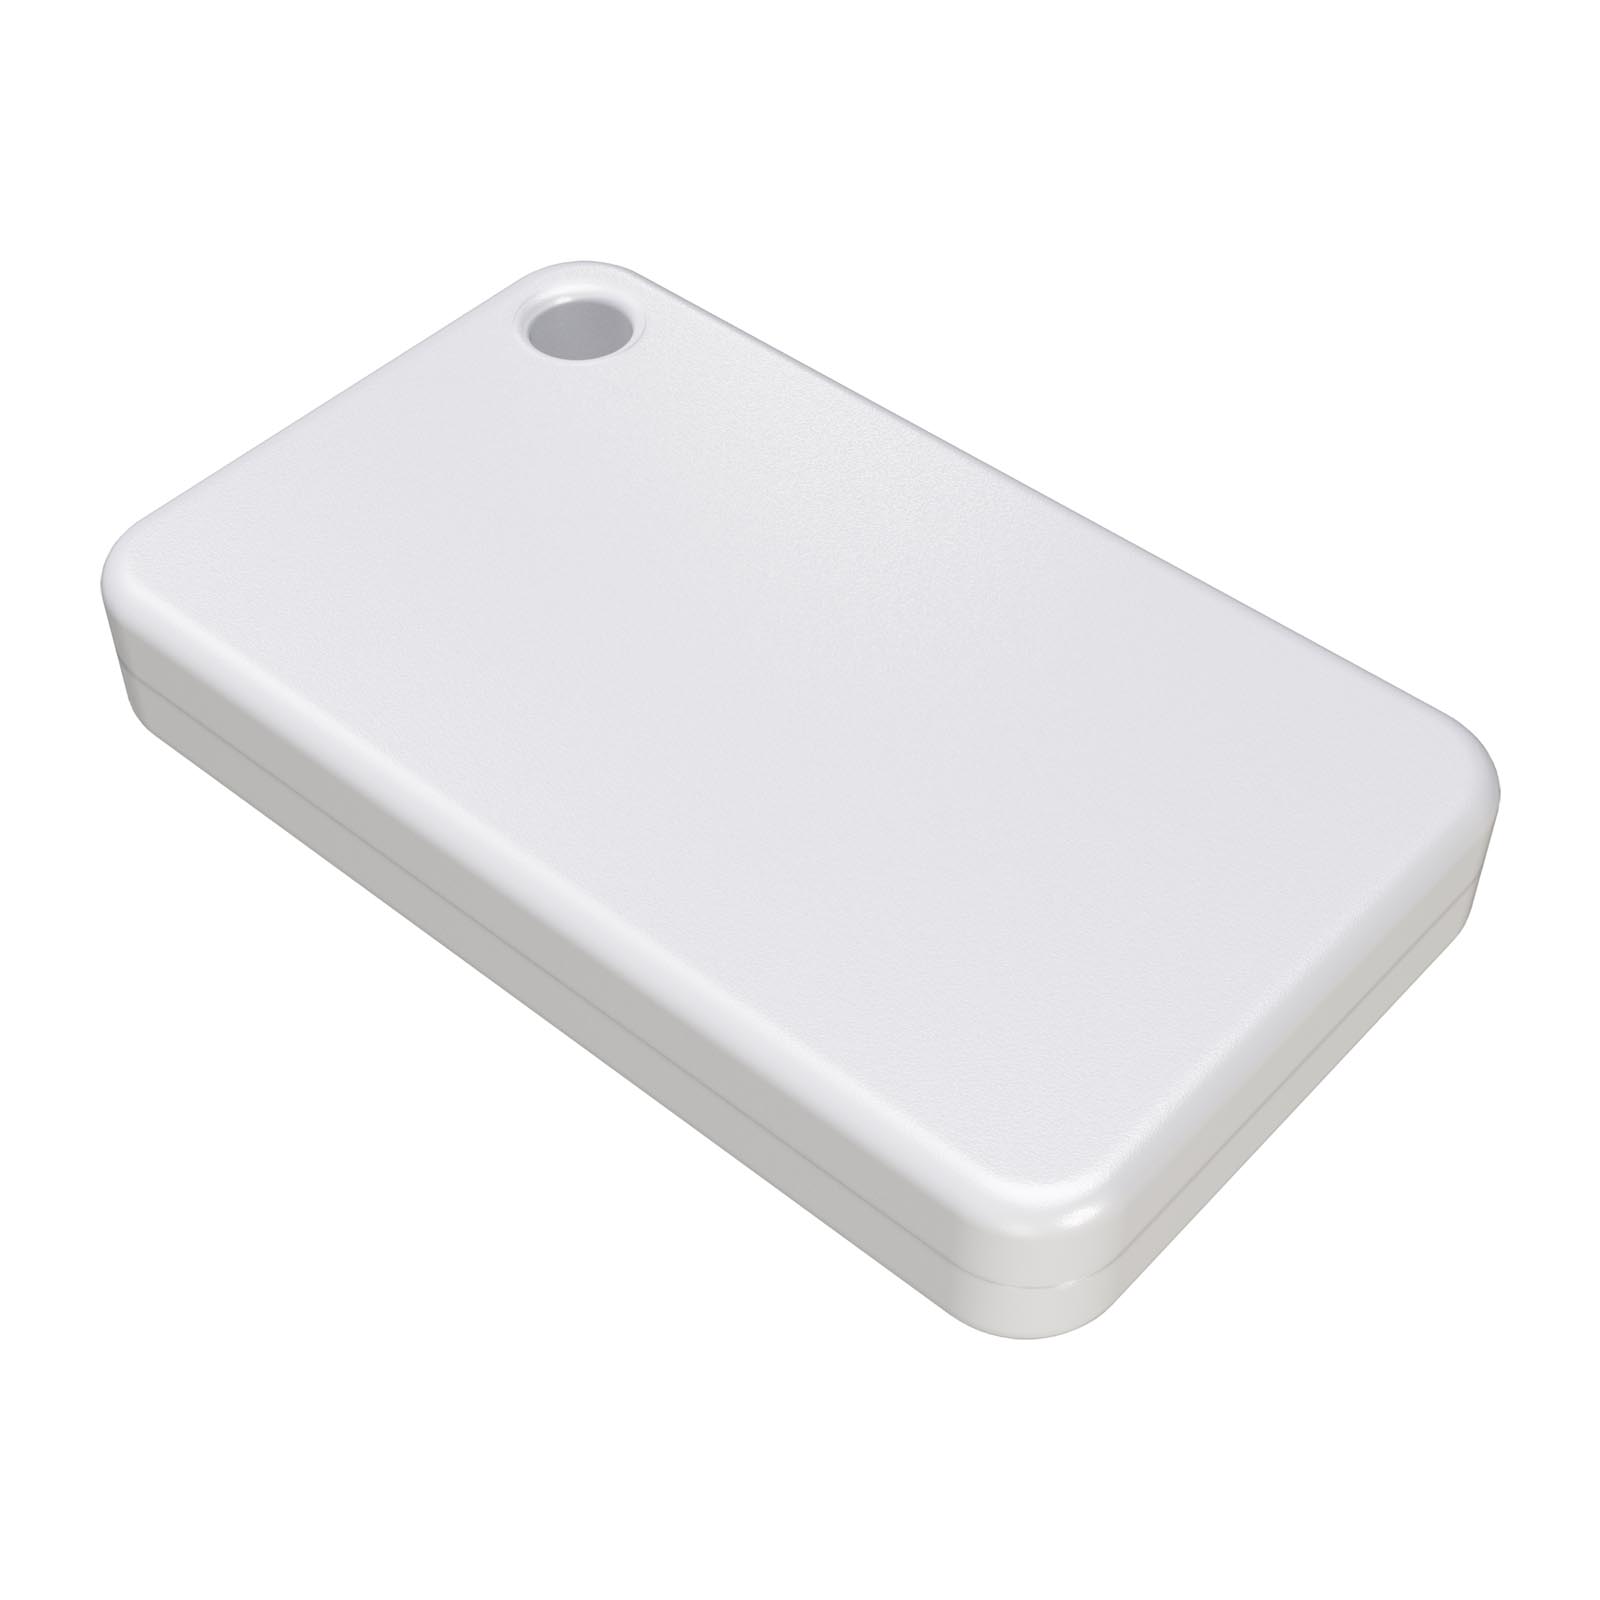 MikroTik Bluetooth tag, wewnętrzny (TG-BT5-IN) :: wisp.pl